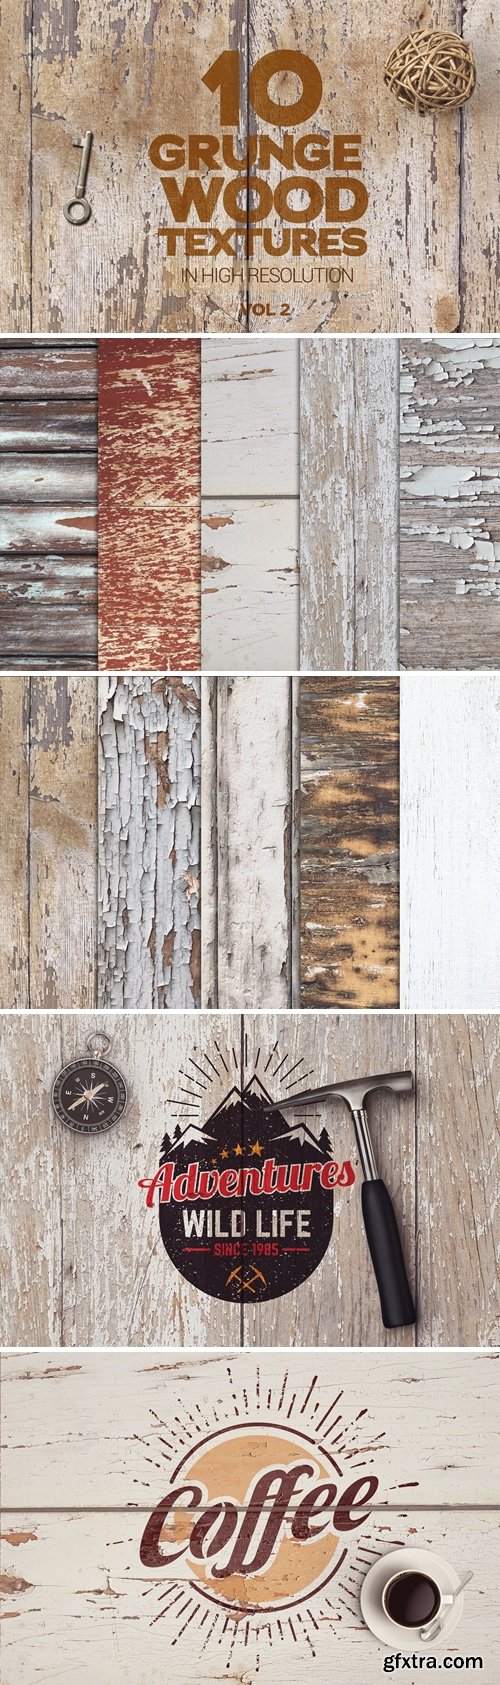 Grunge Wood Textures x10 vol2